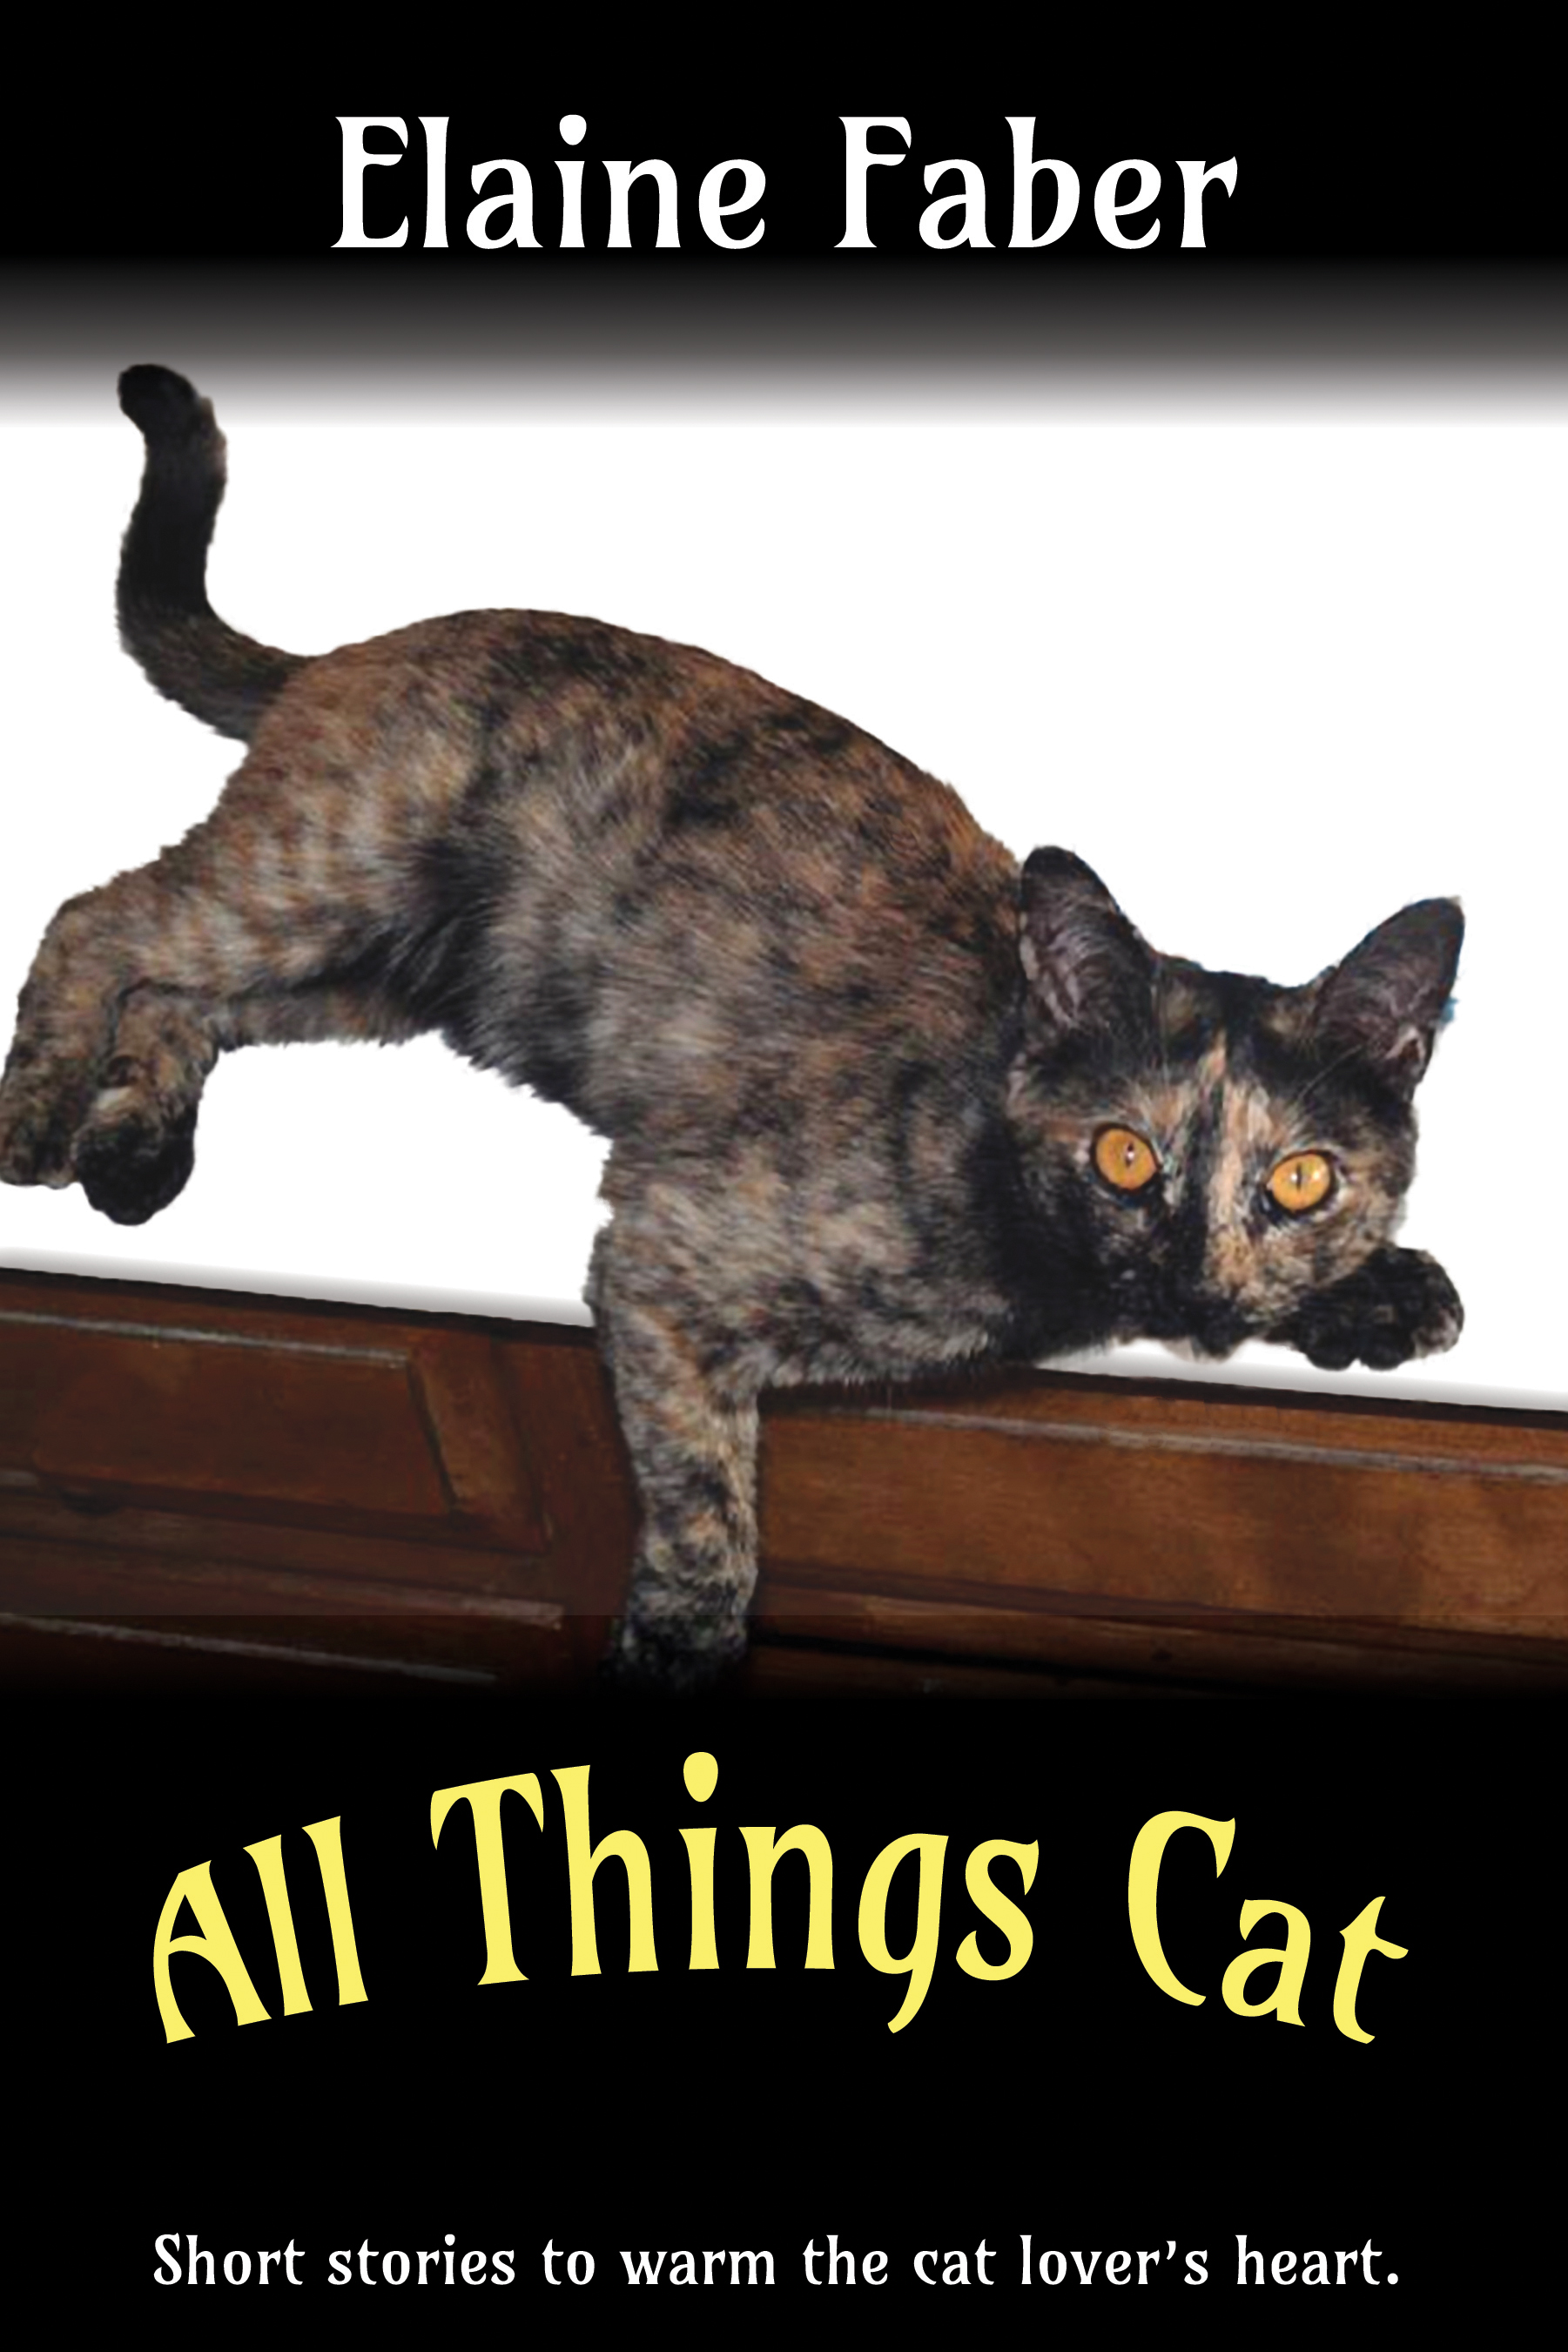 Cat thing. Things кошки. Элайн Фабер. Элейн кошка. Cat short story.